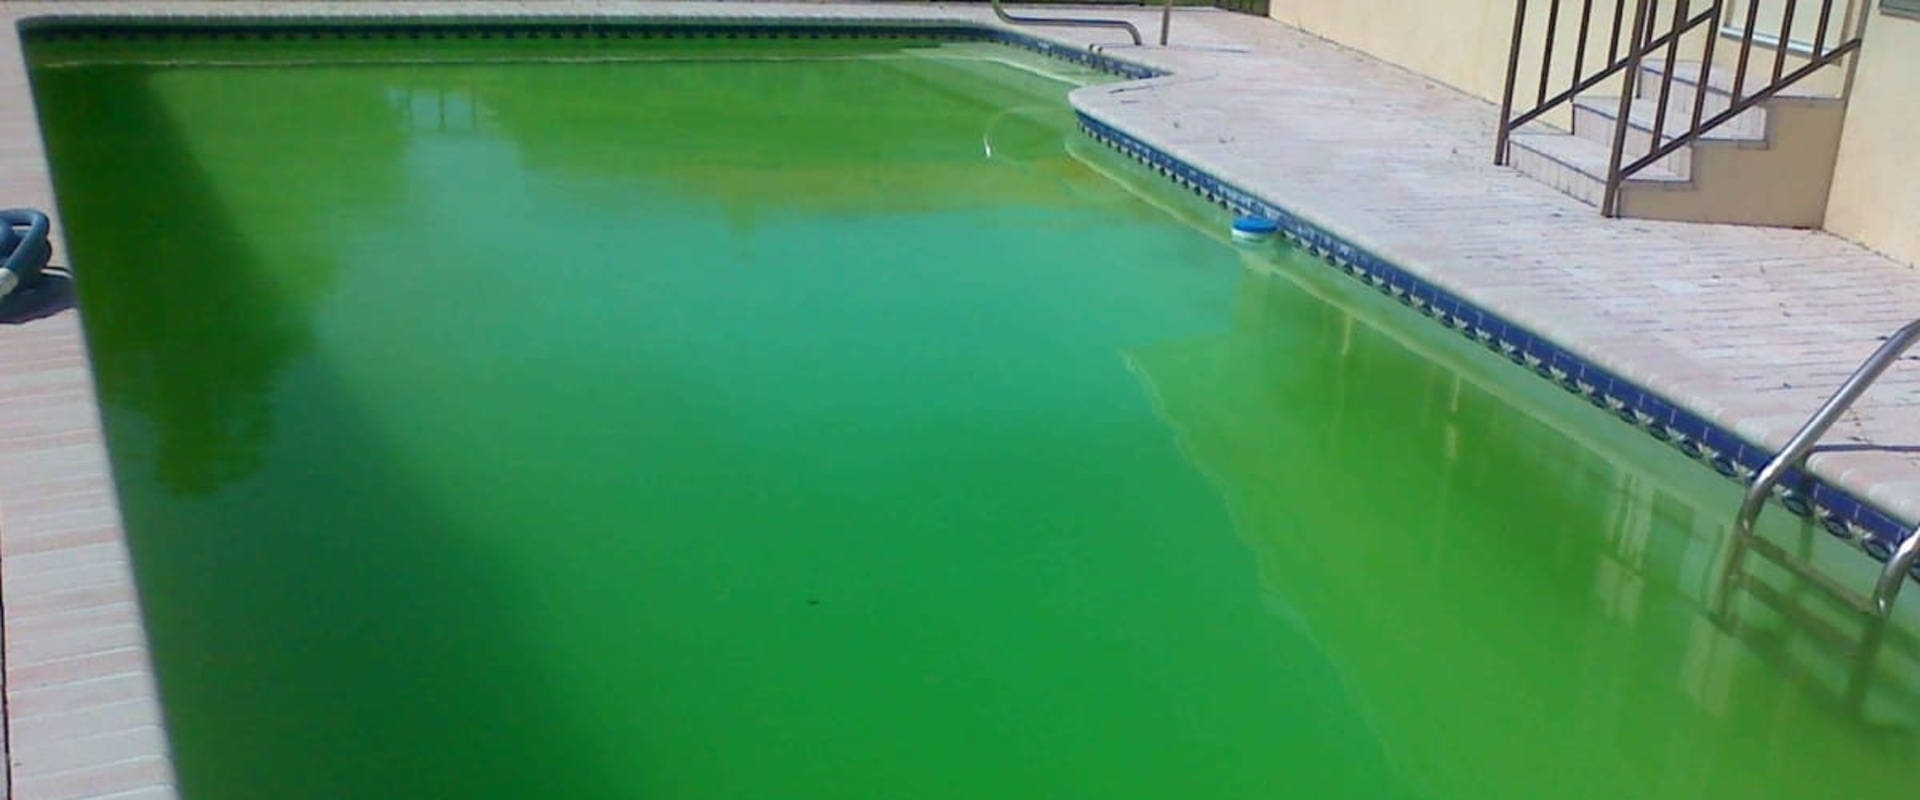 Treating Algae in Swimming Pools